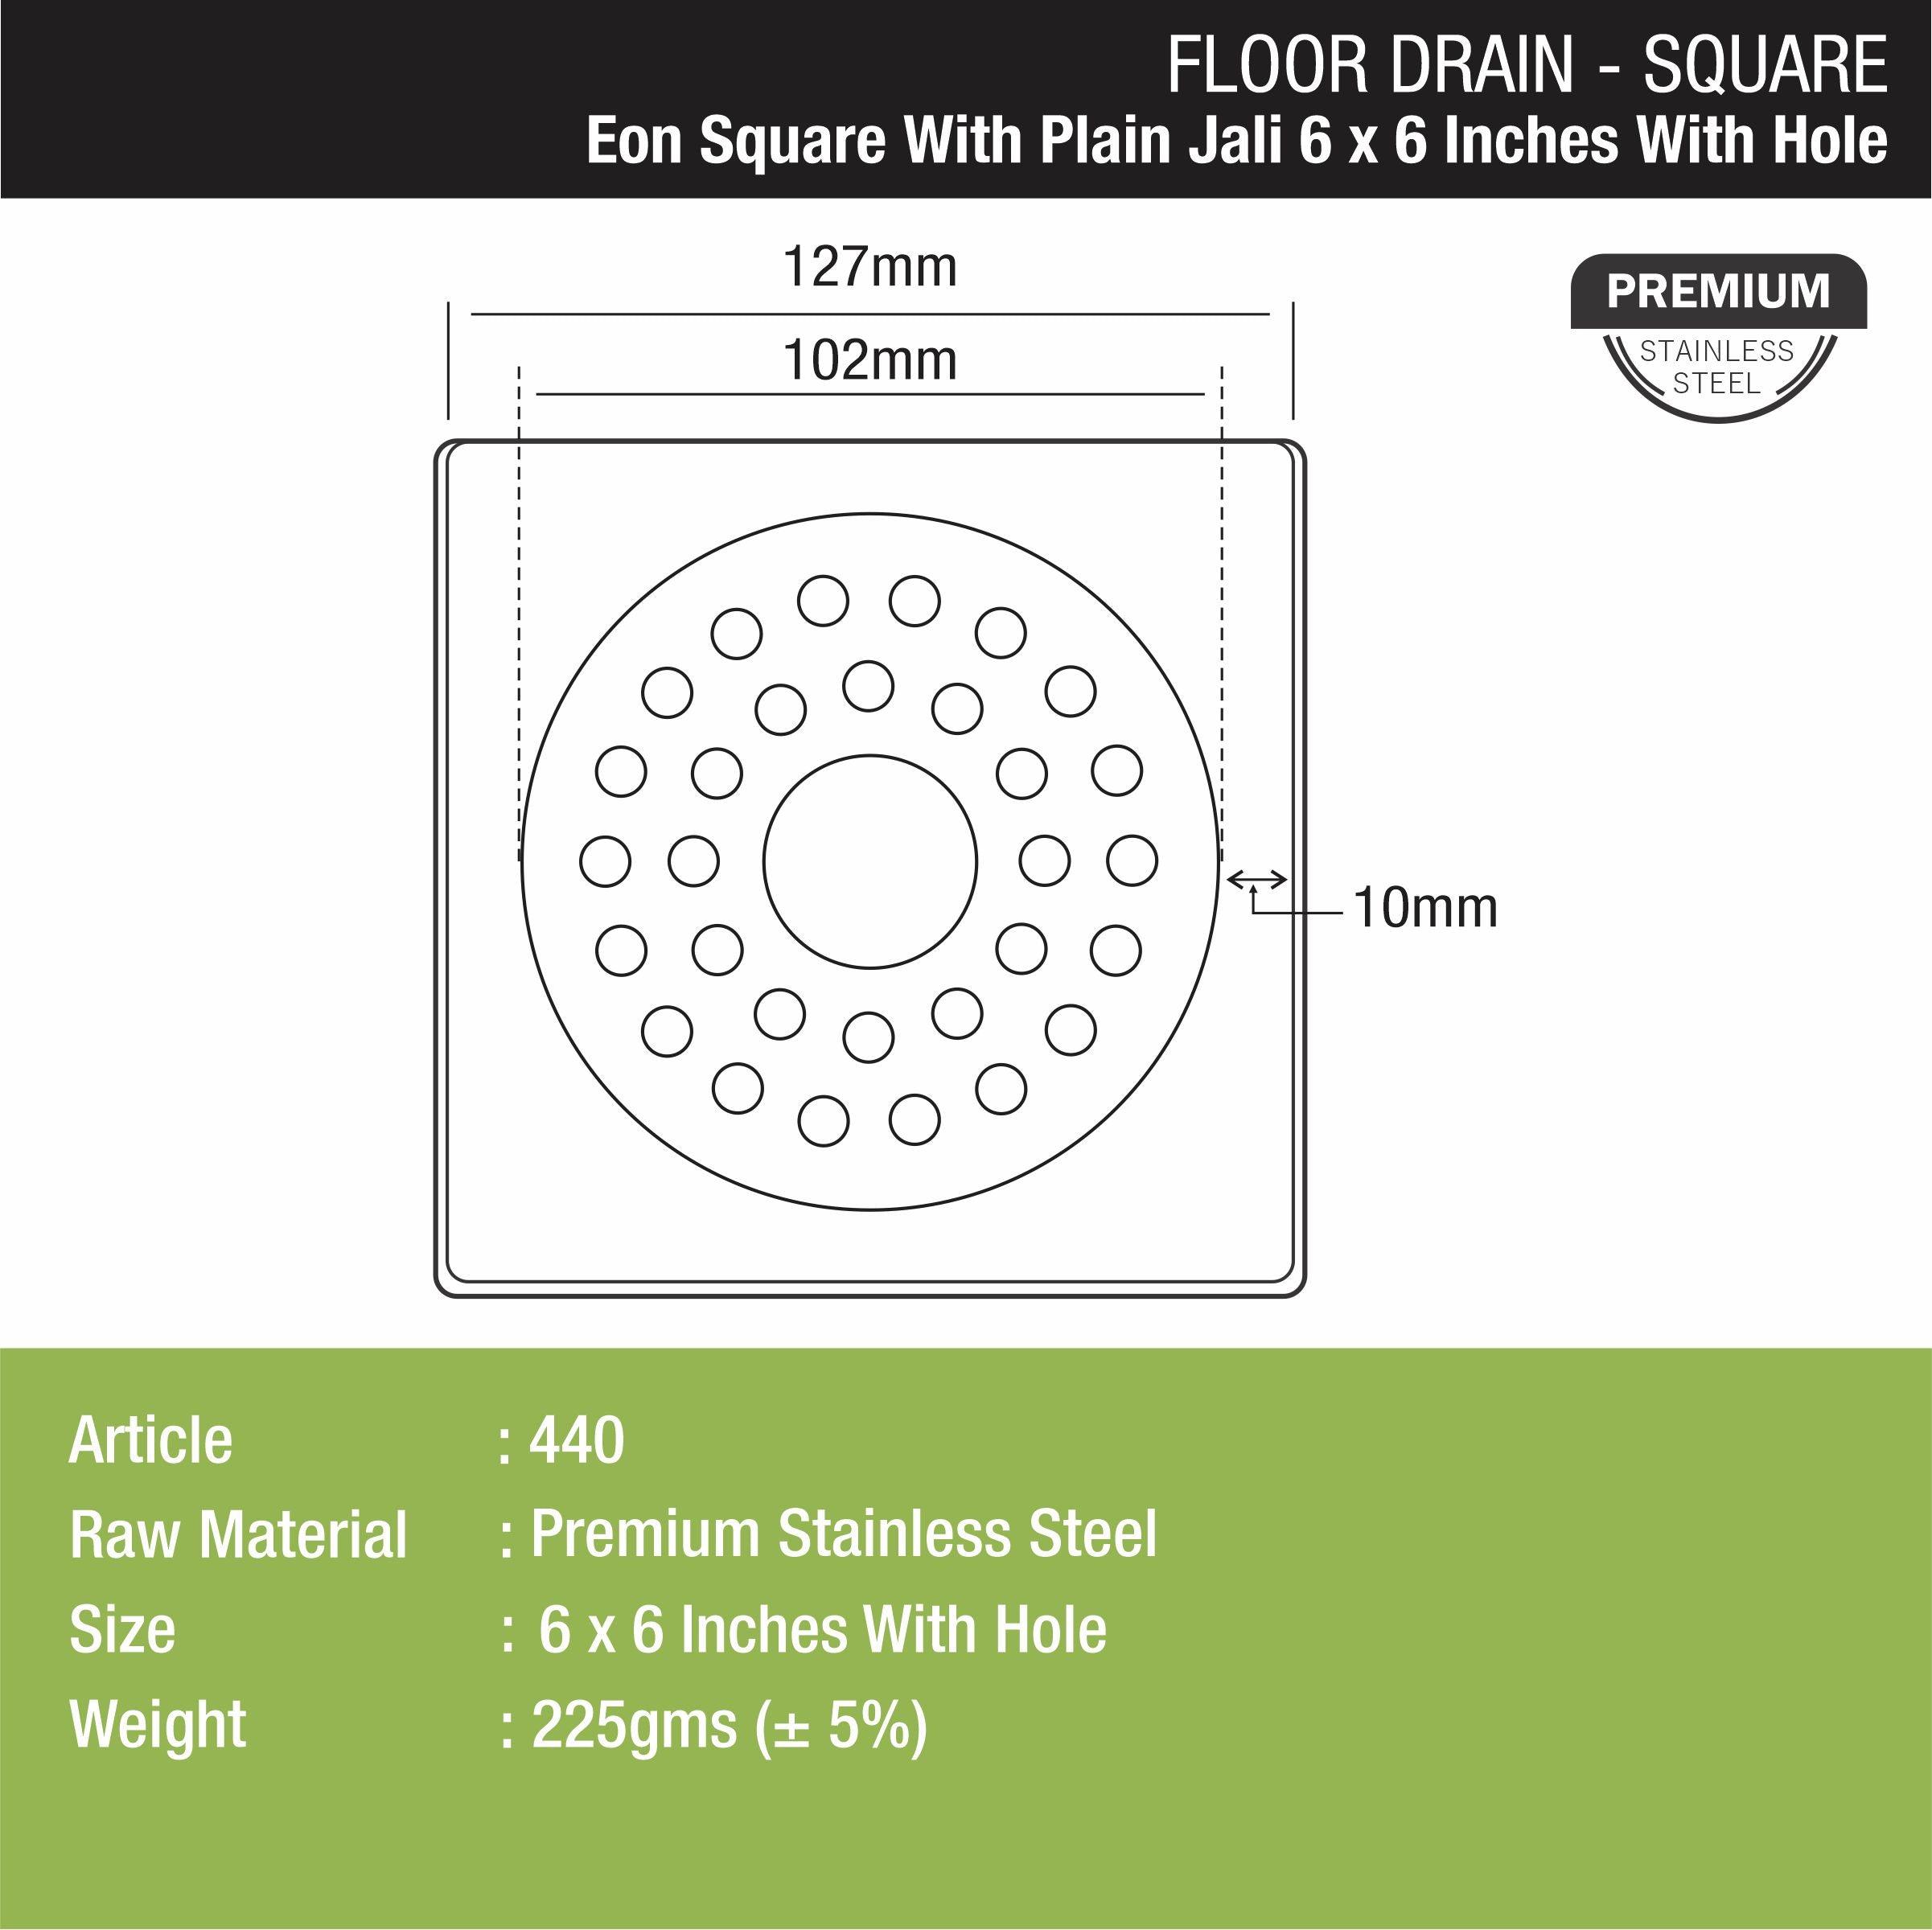 Eon Square Floor Drain with Plain Jali and Hole (6 x 6 Inches) - LIPKA - Lipka Home